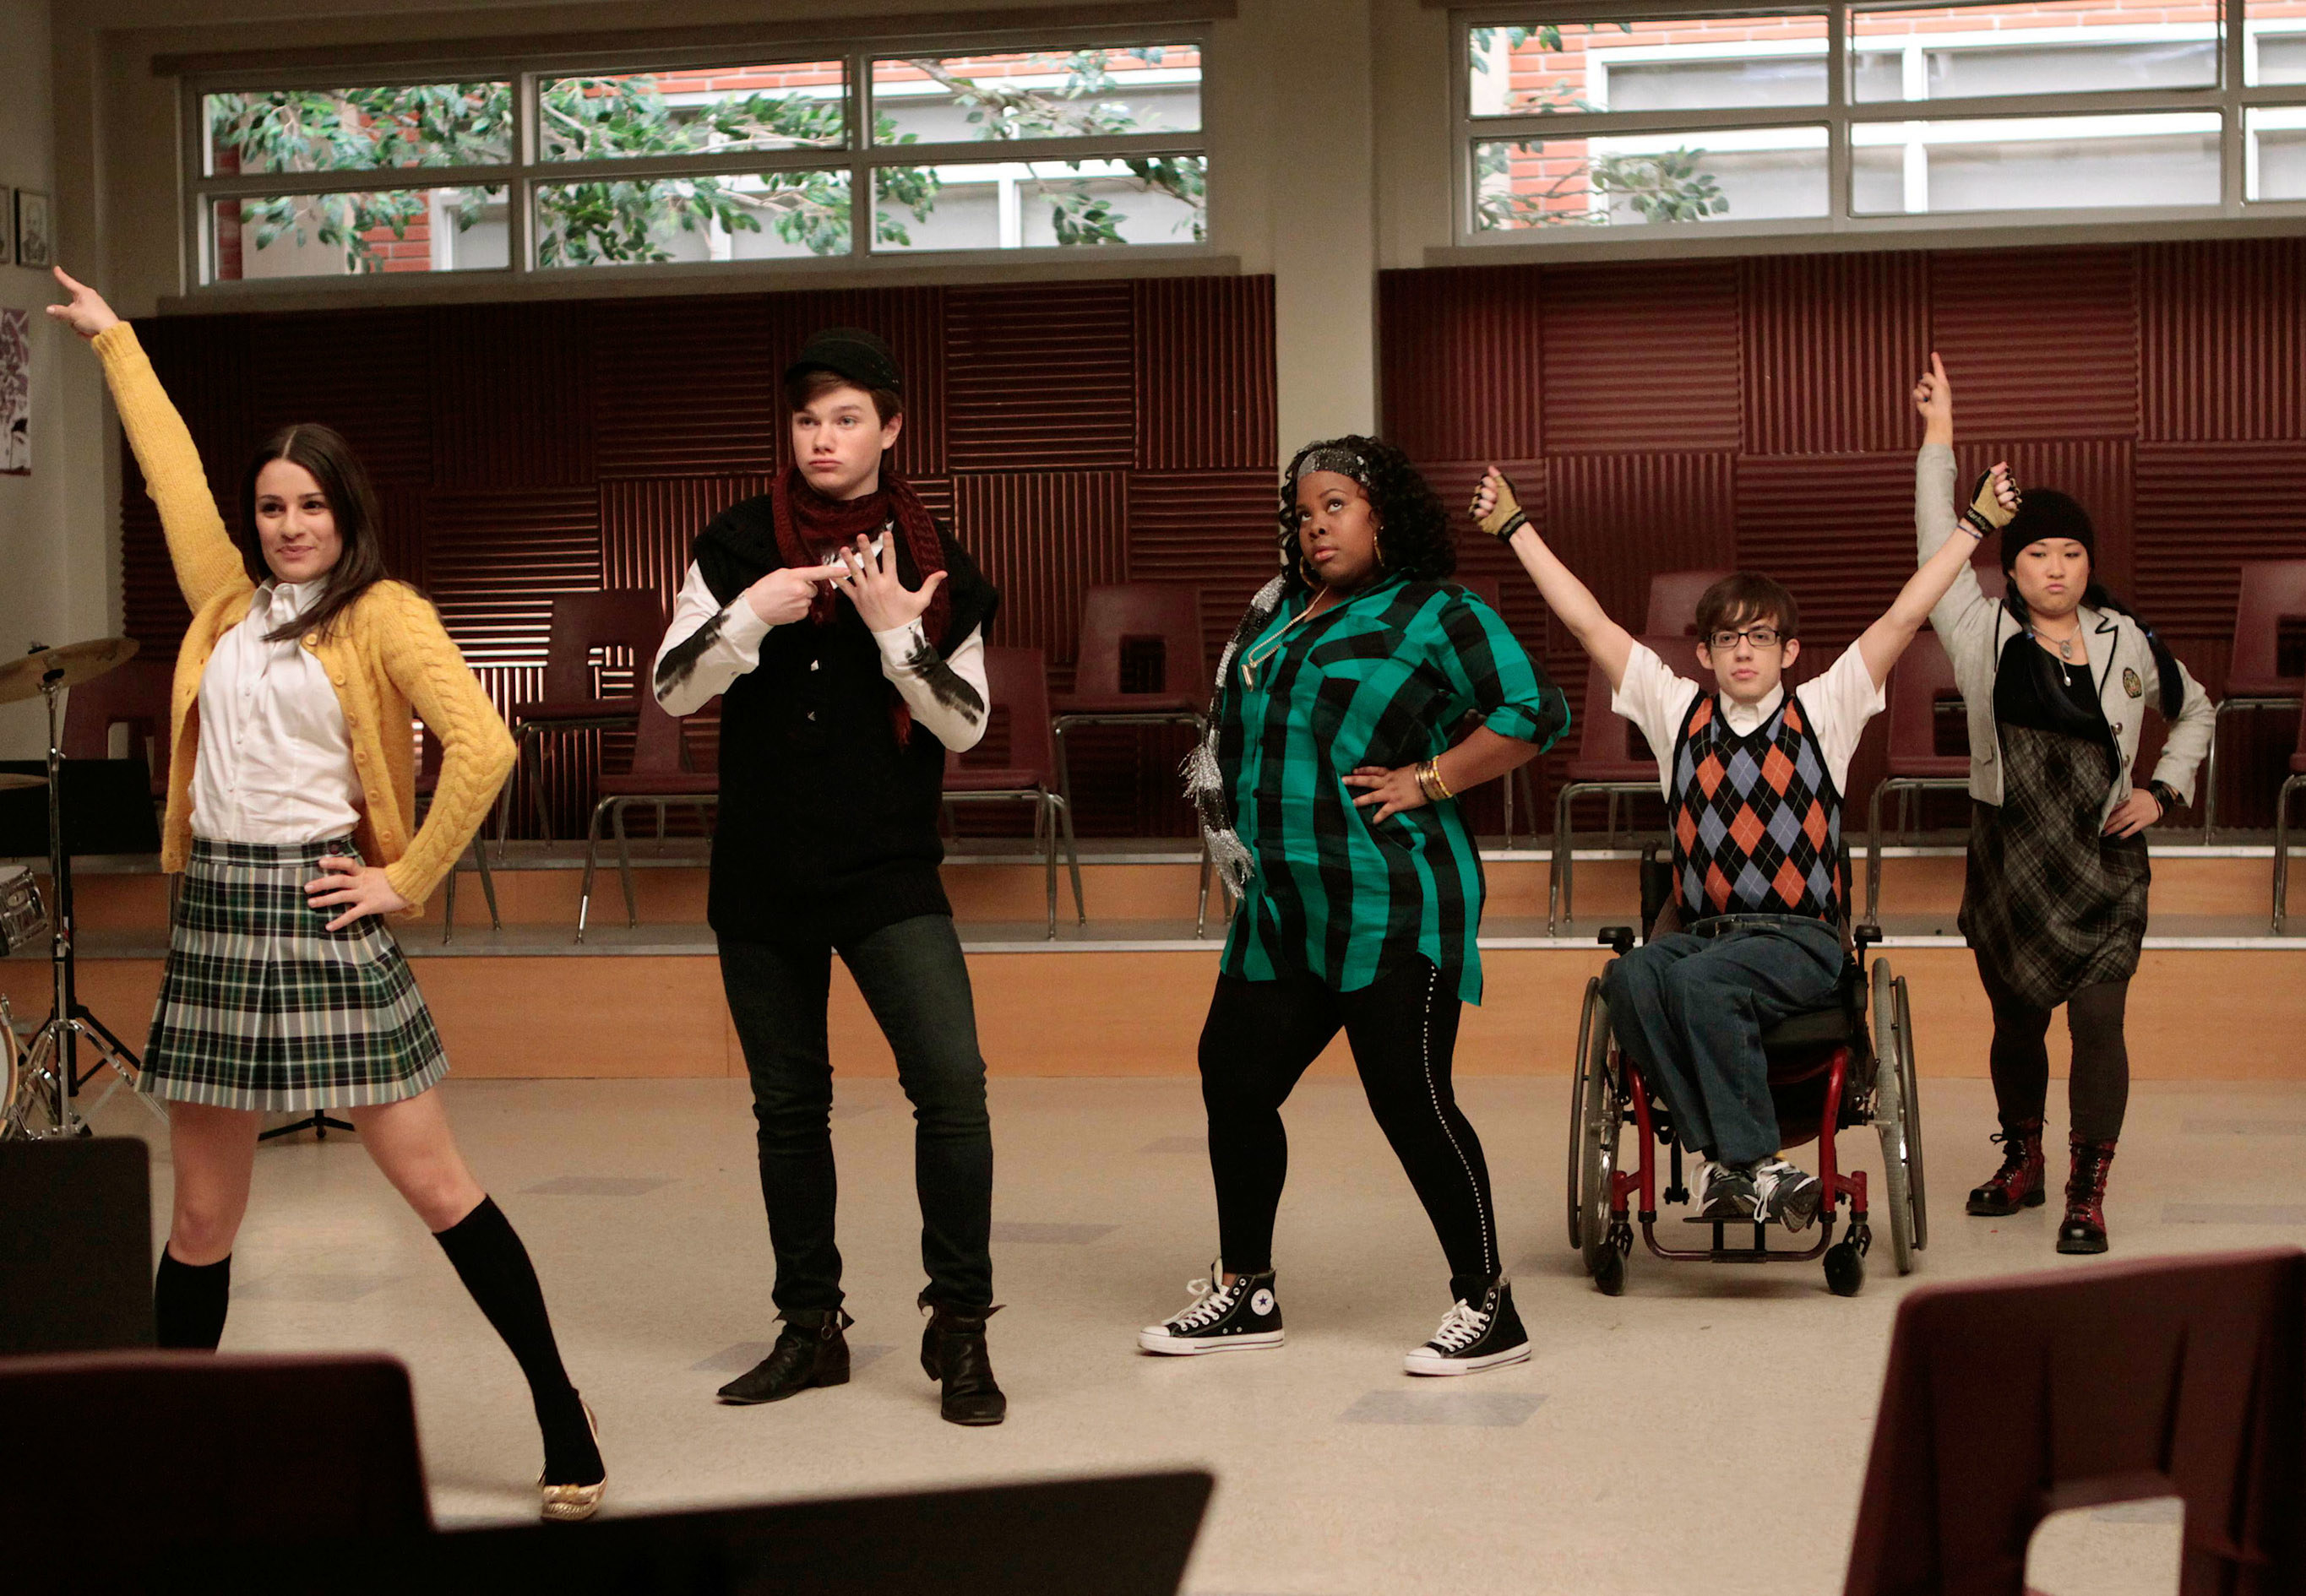 cast members dancing in the Glee rehearsal room